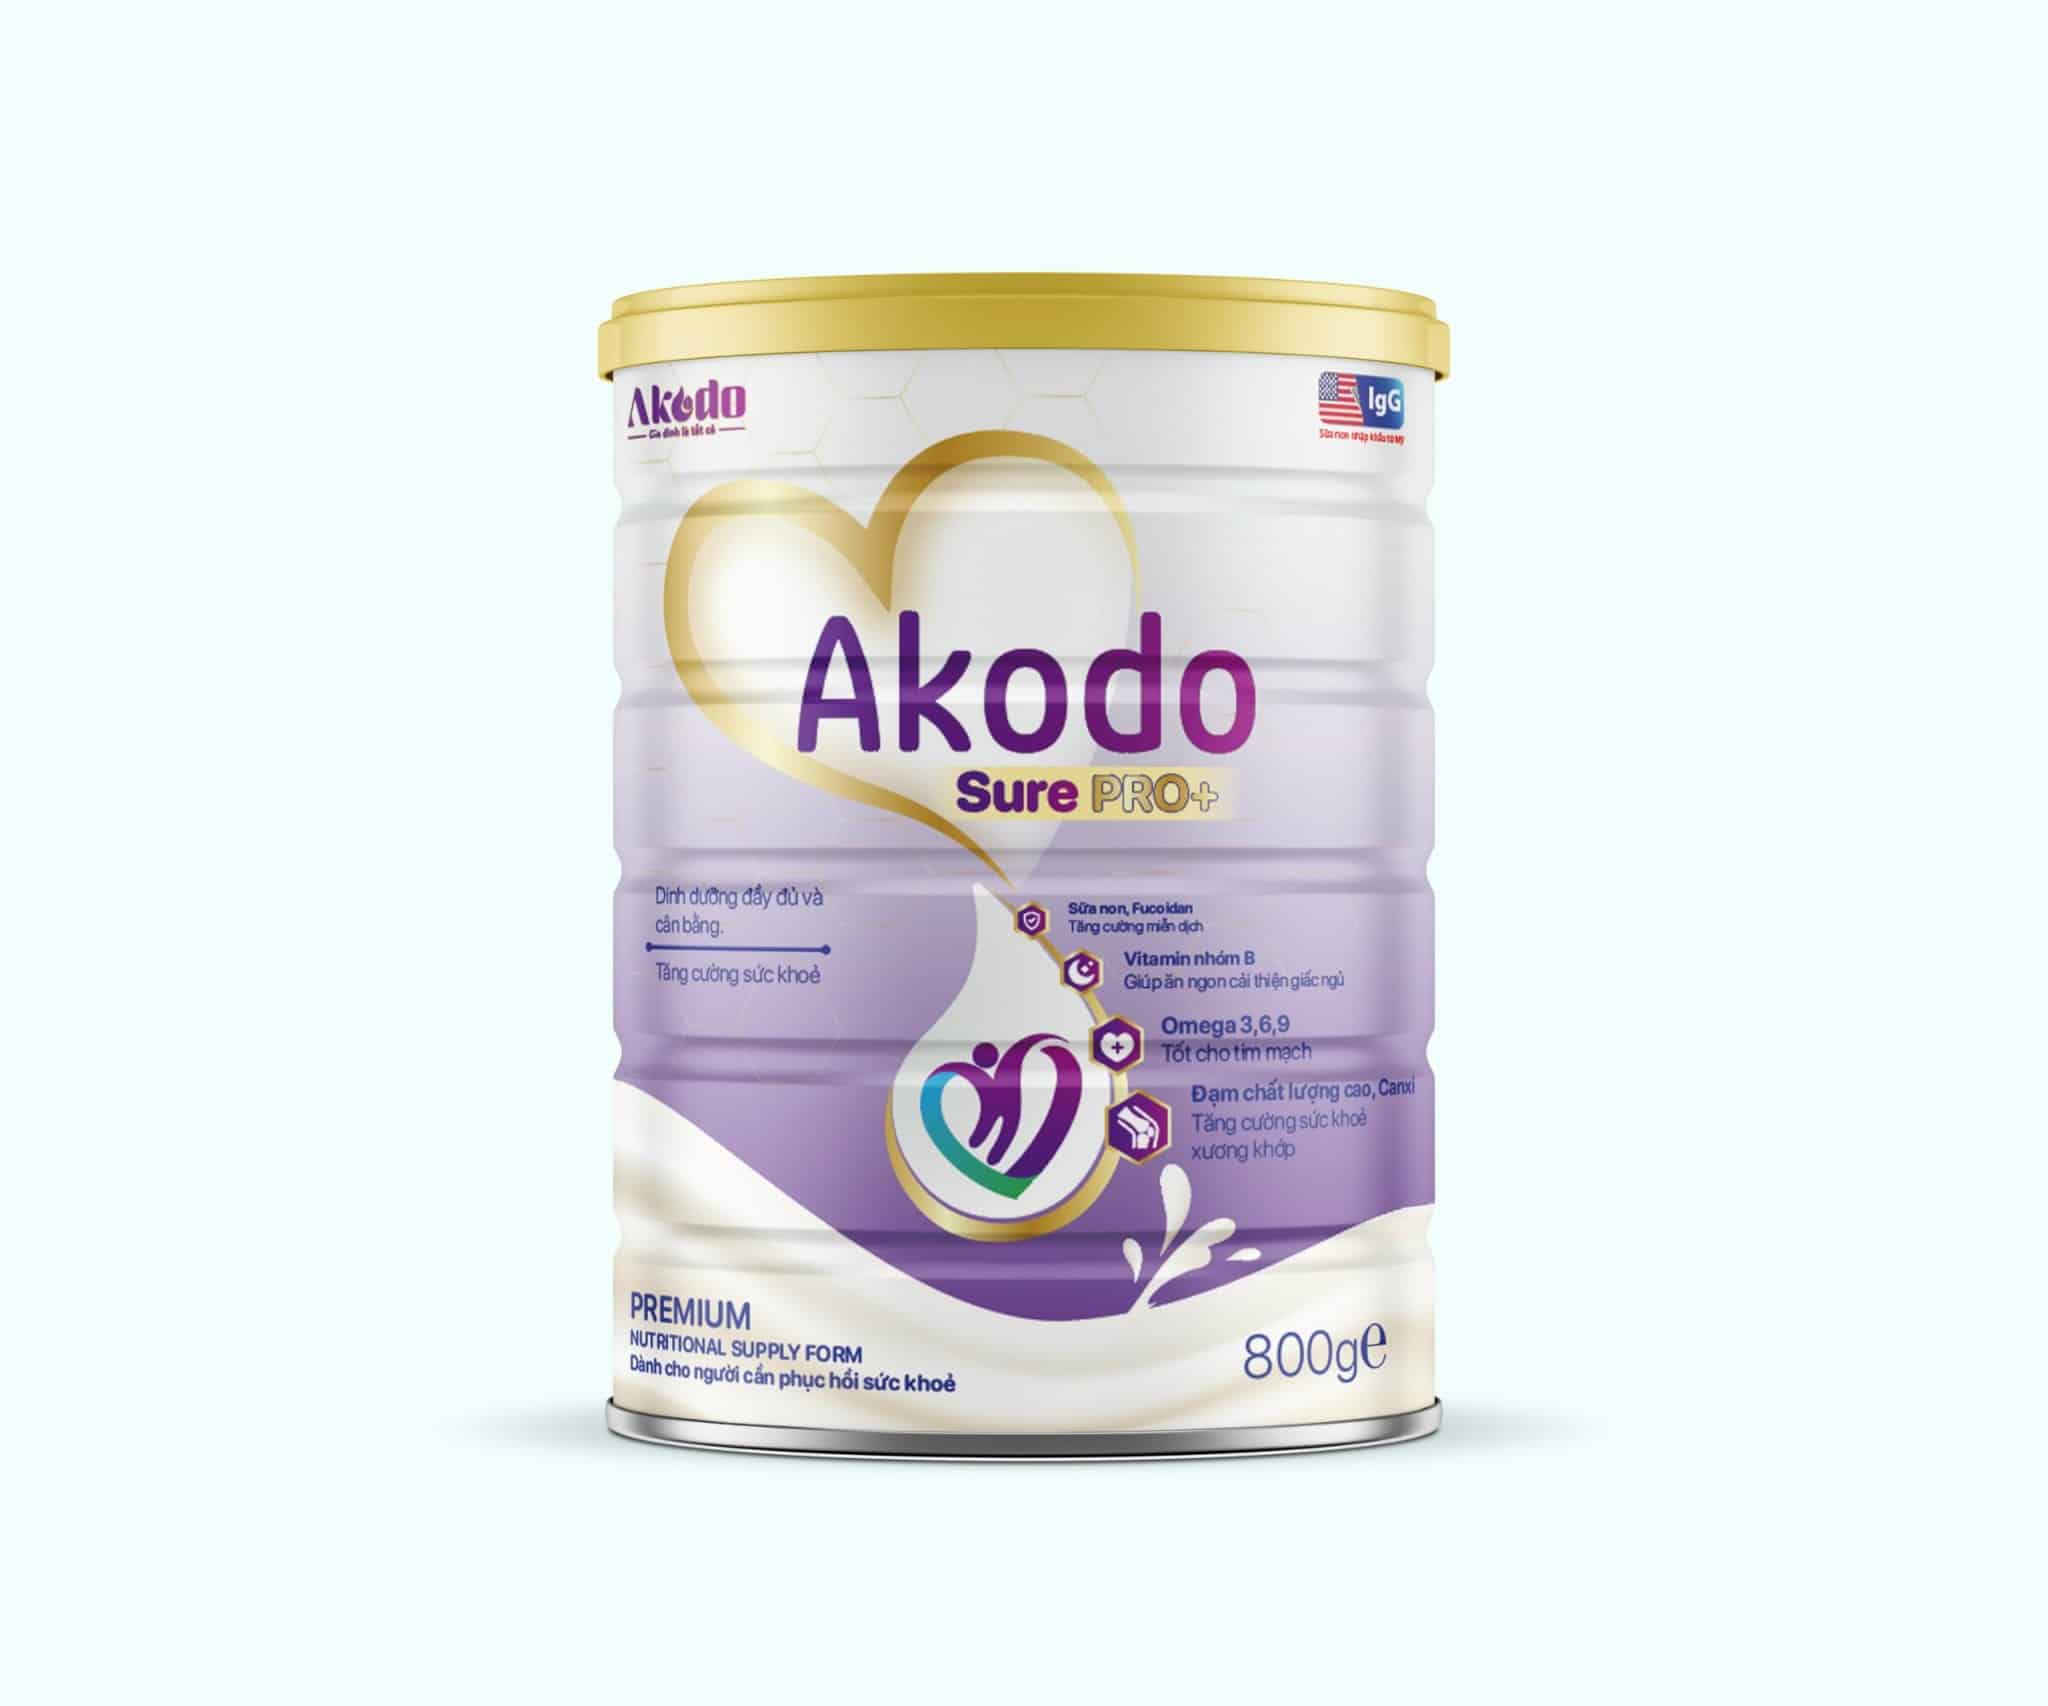 Akodo Sure Pro+